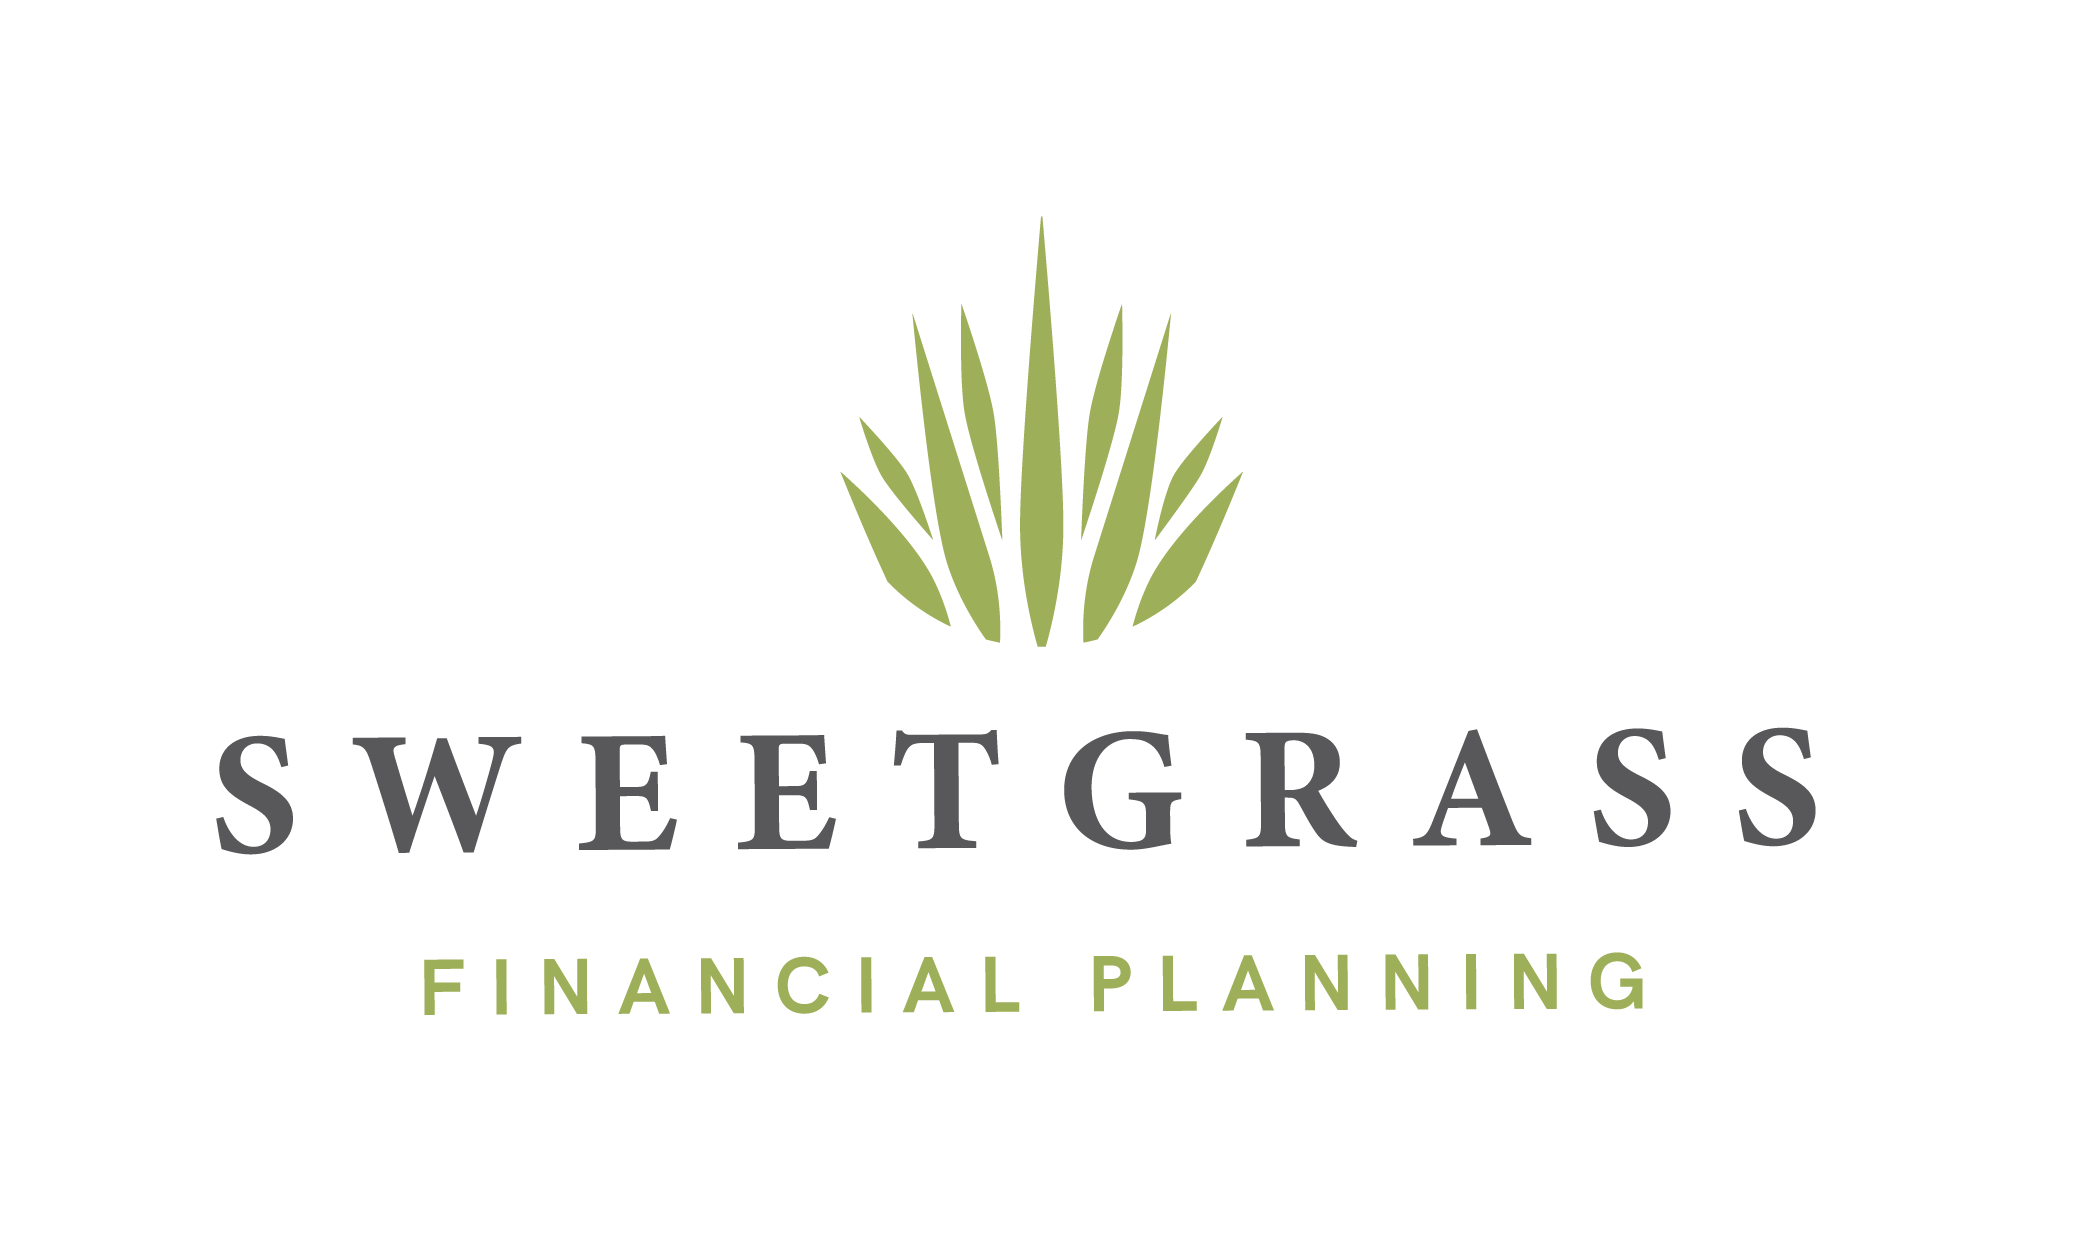 Sweetgrass Financial Planning